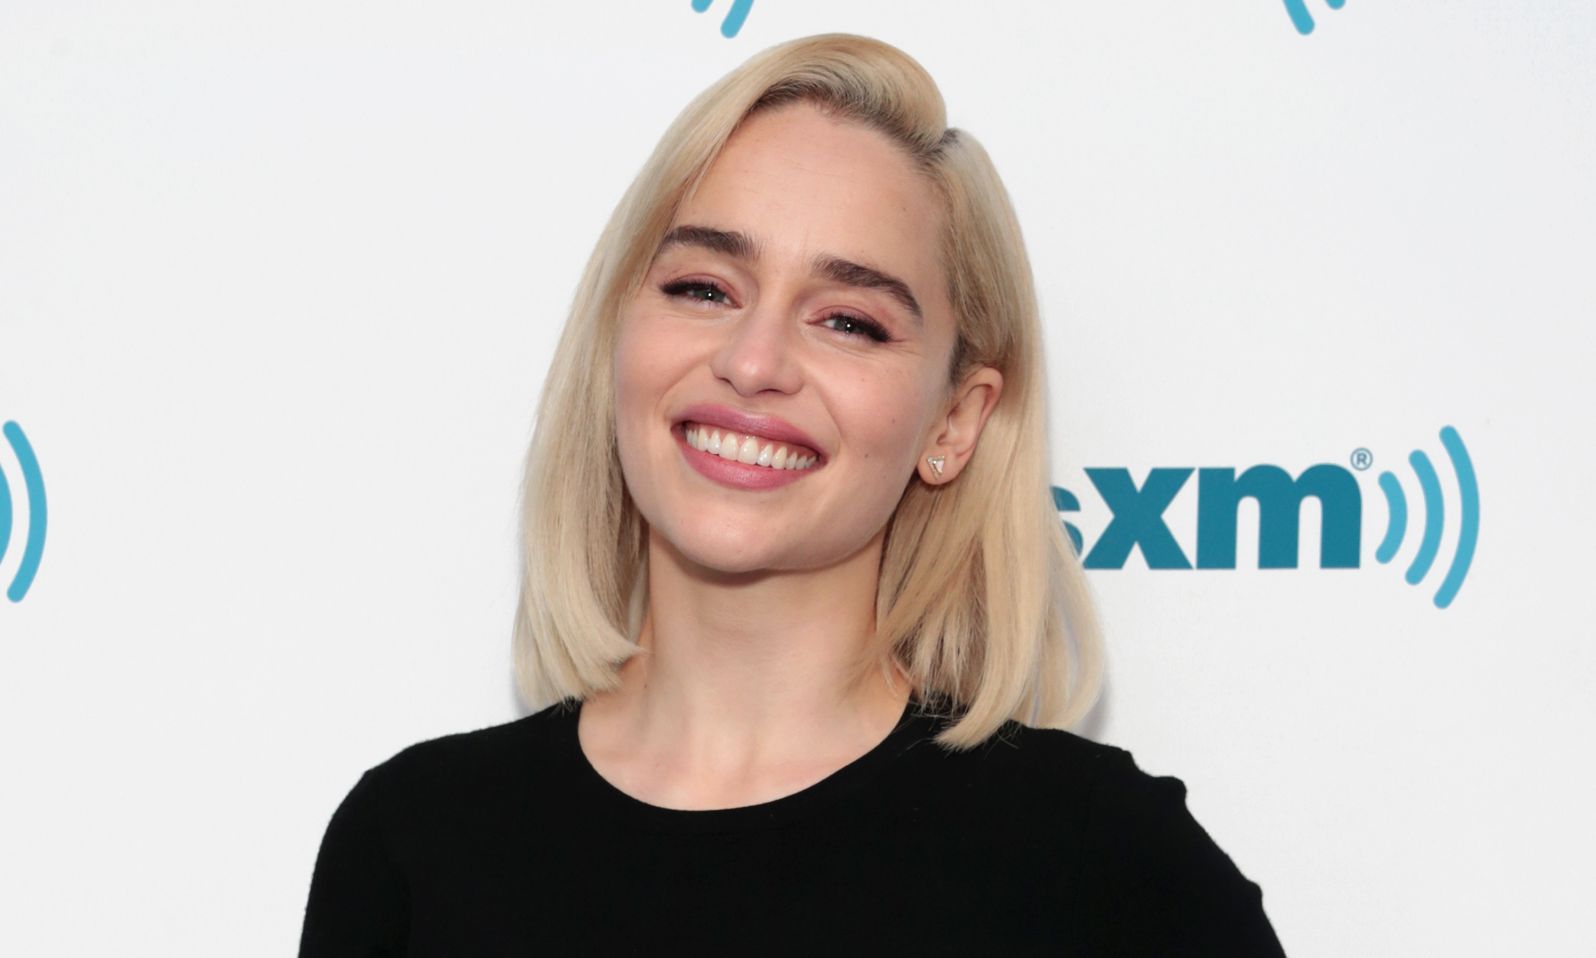 Emilia Clarke Joins Cast of Marvel's 'Secret Invasion' Series